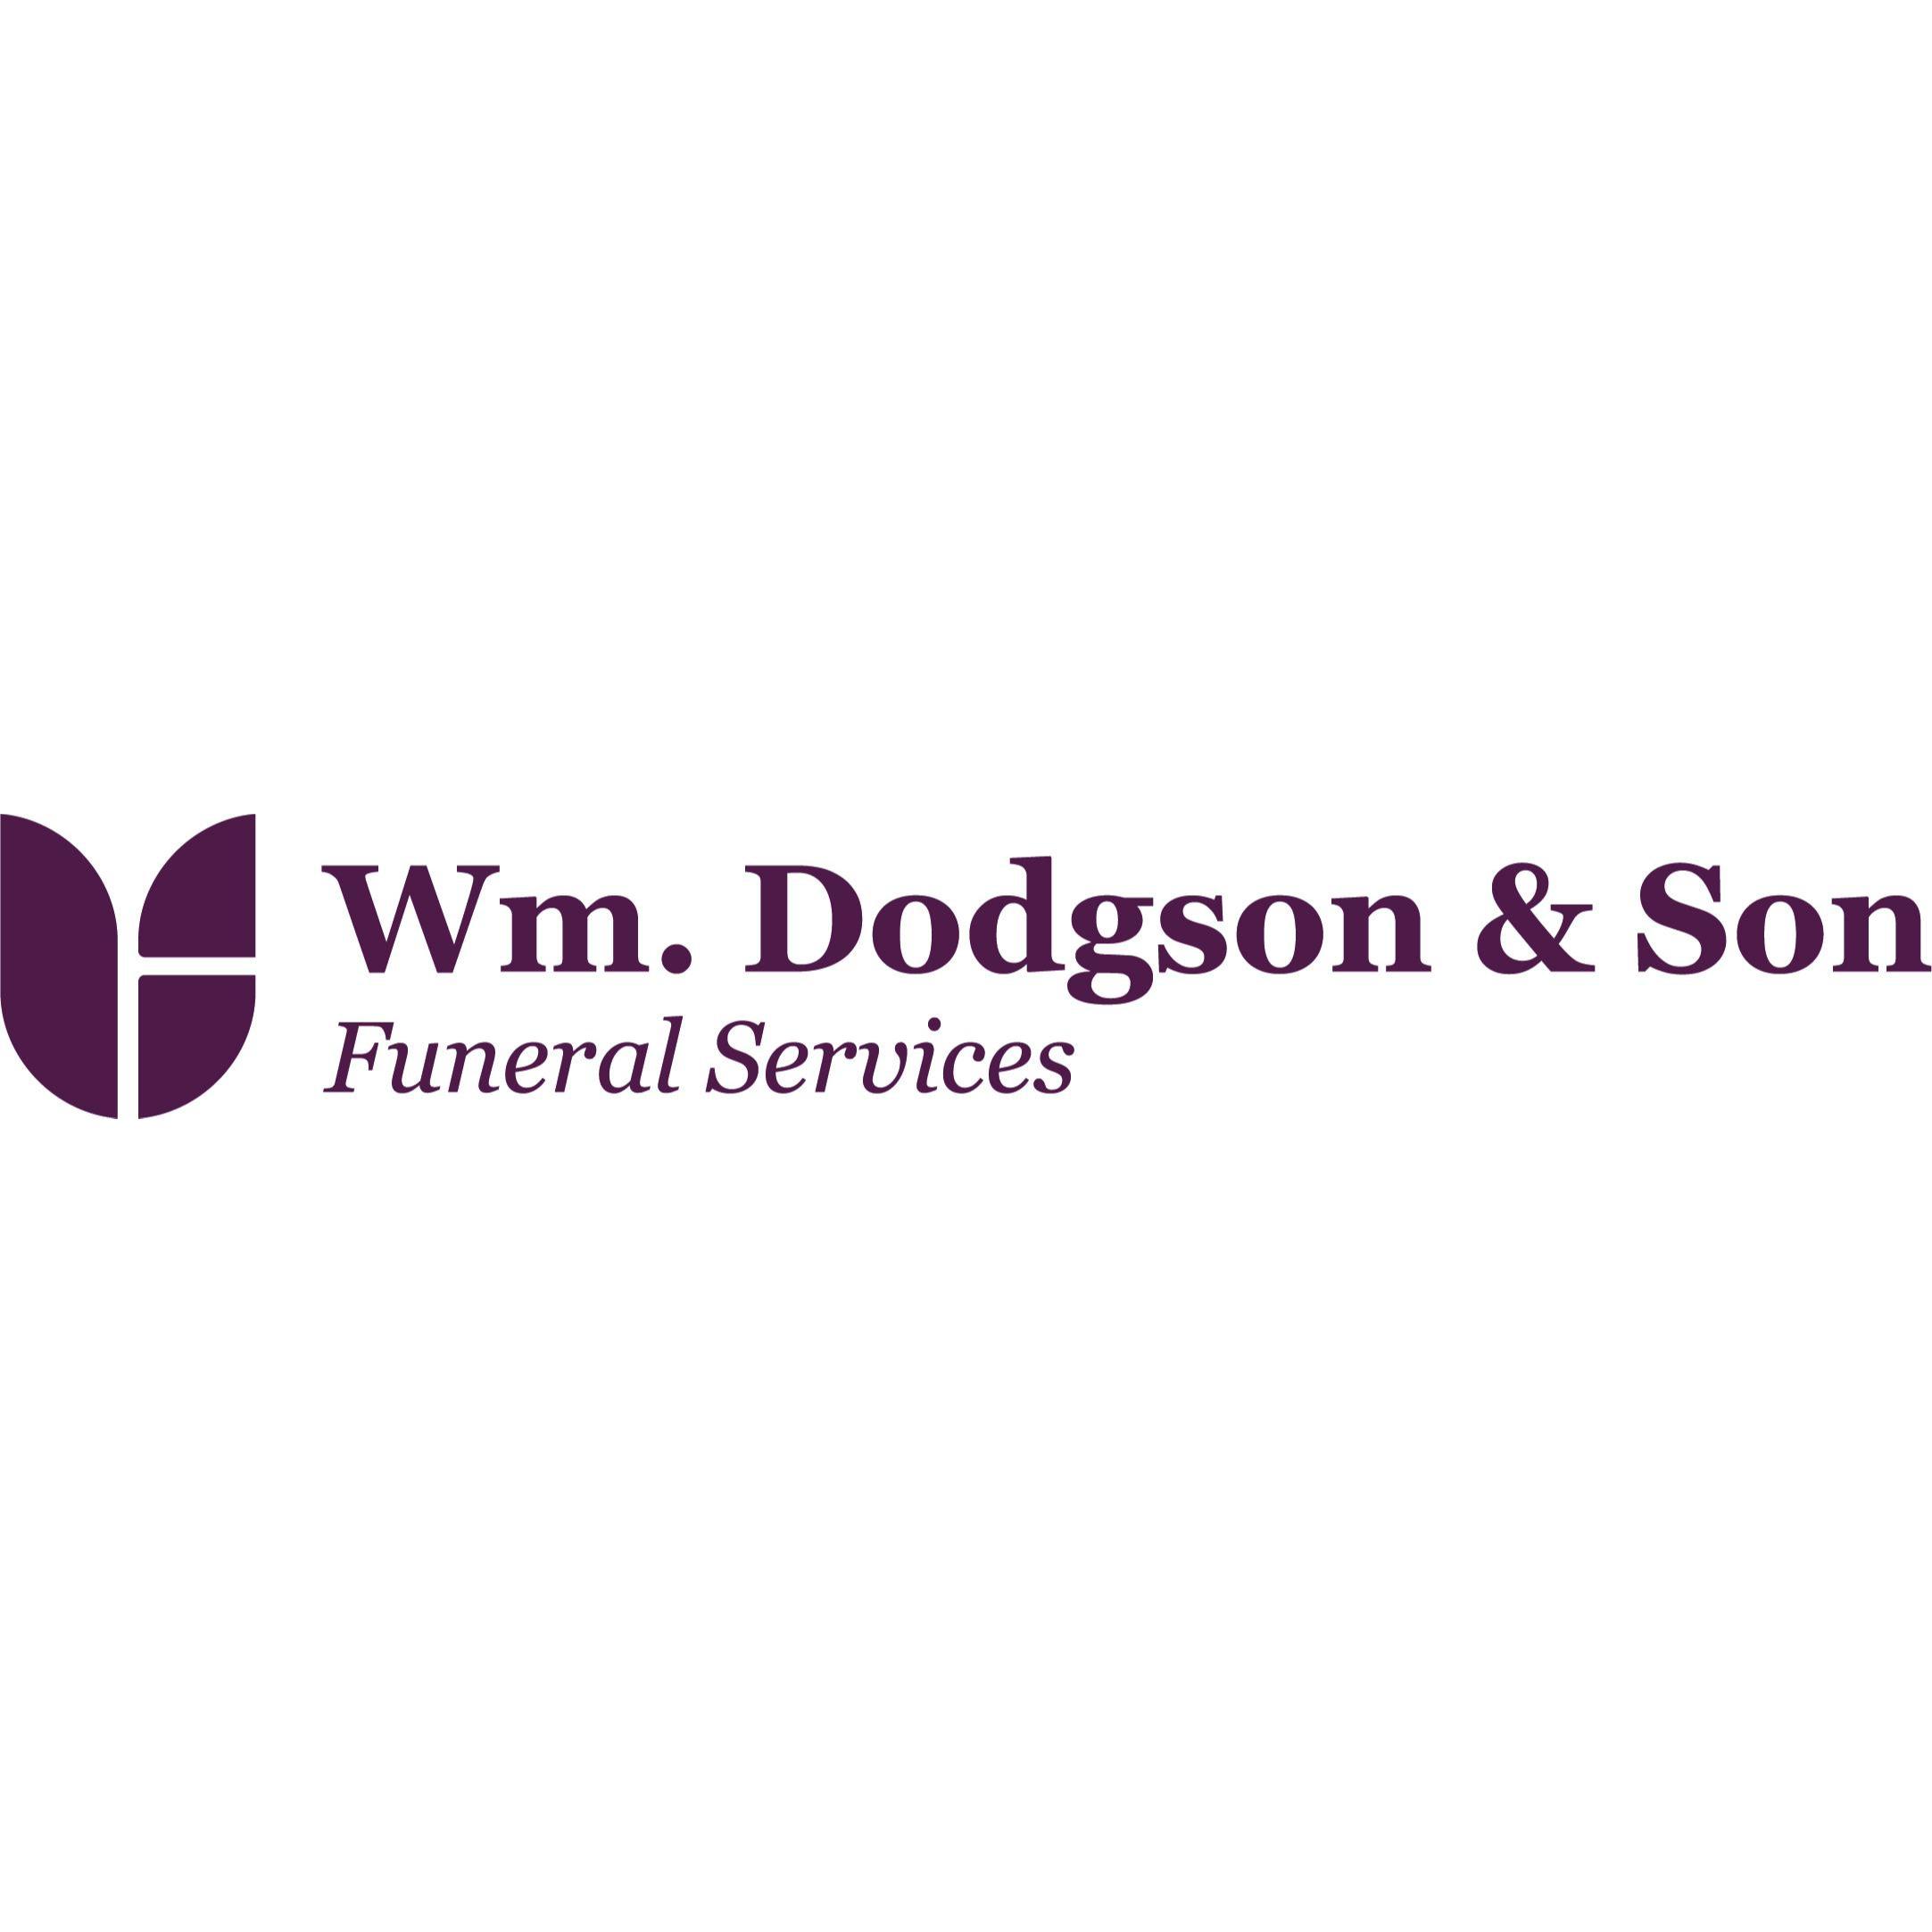 Wm. Dodgson & Son Funeral Services Logo